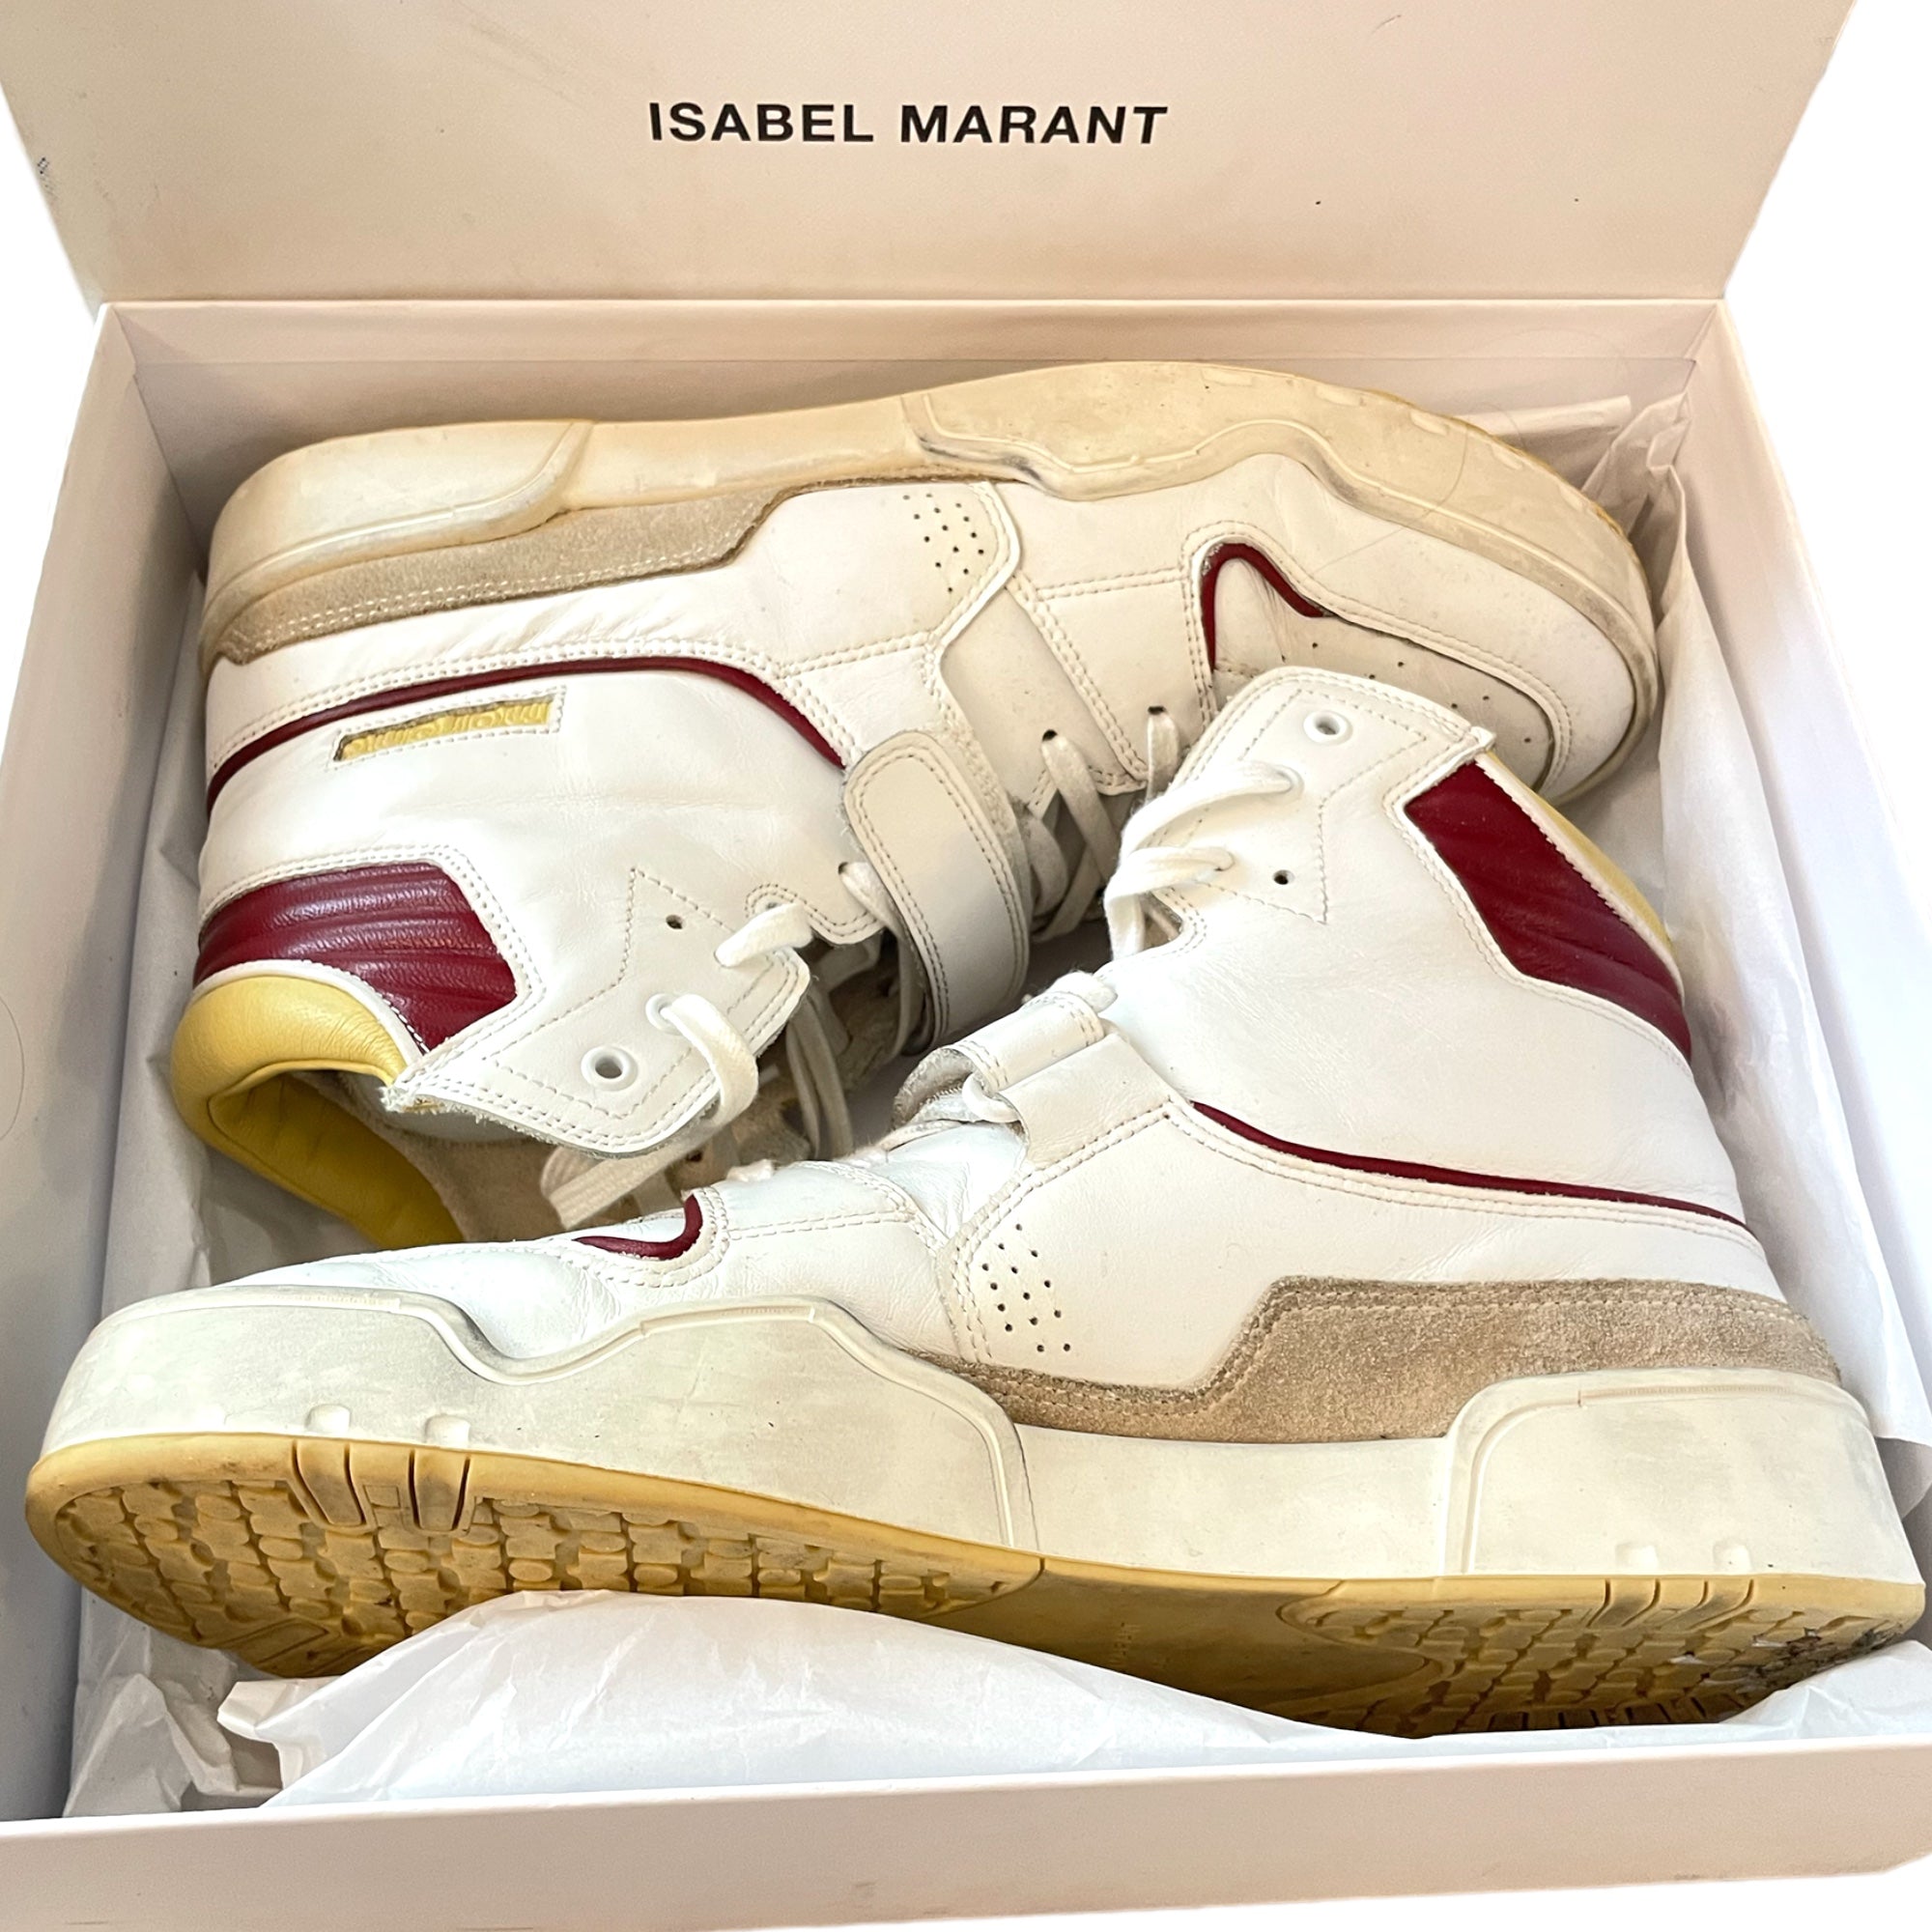 ISABEL MARANT Men's Alsee high-top sneakers |Size: 44|